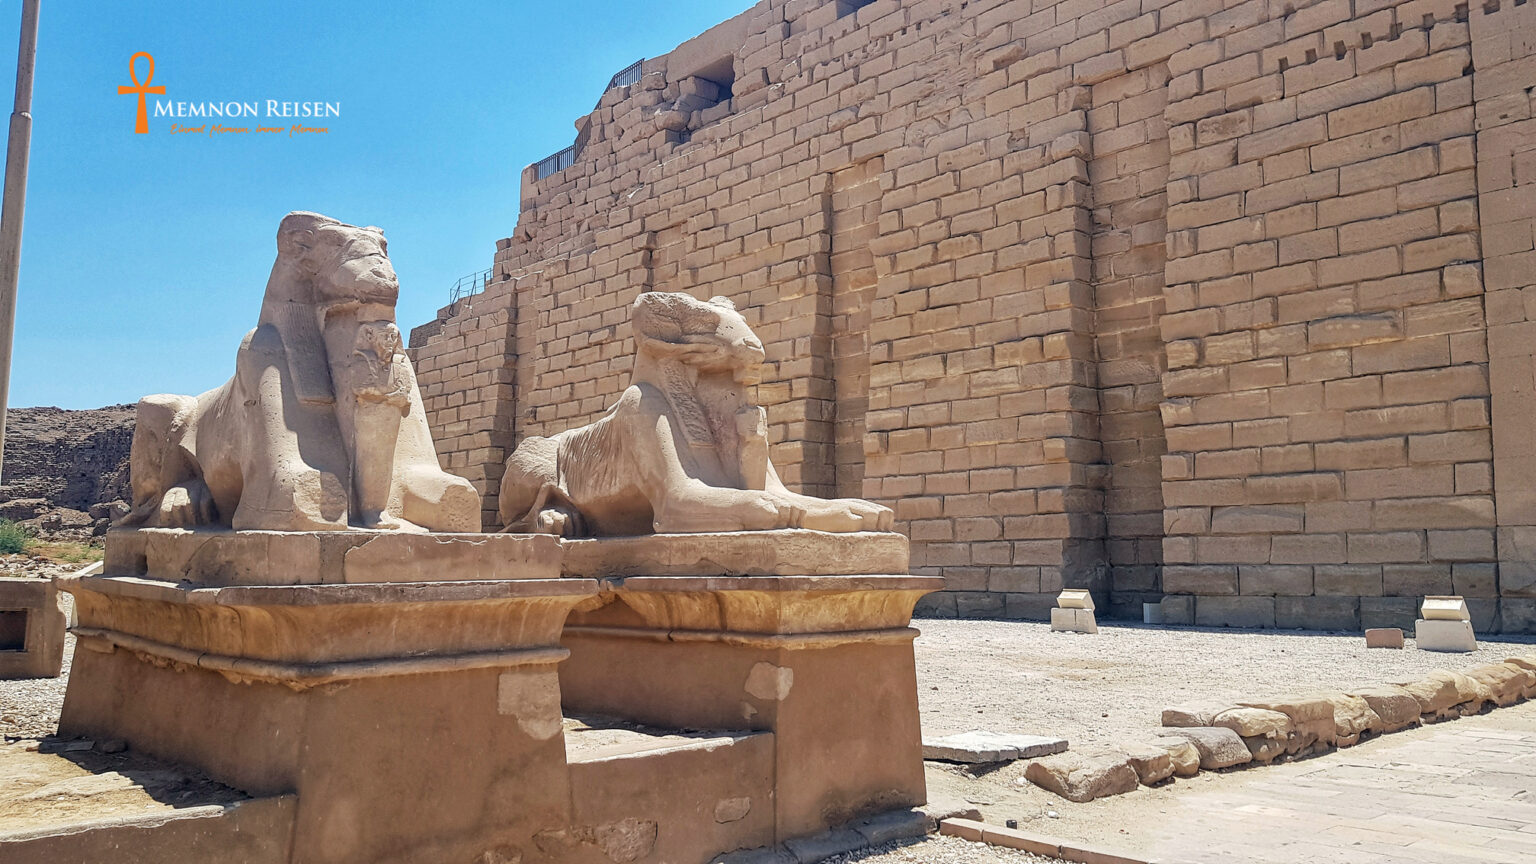 Luxor zwei Tage privat